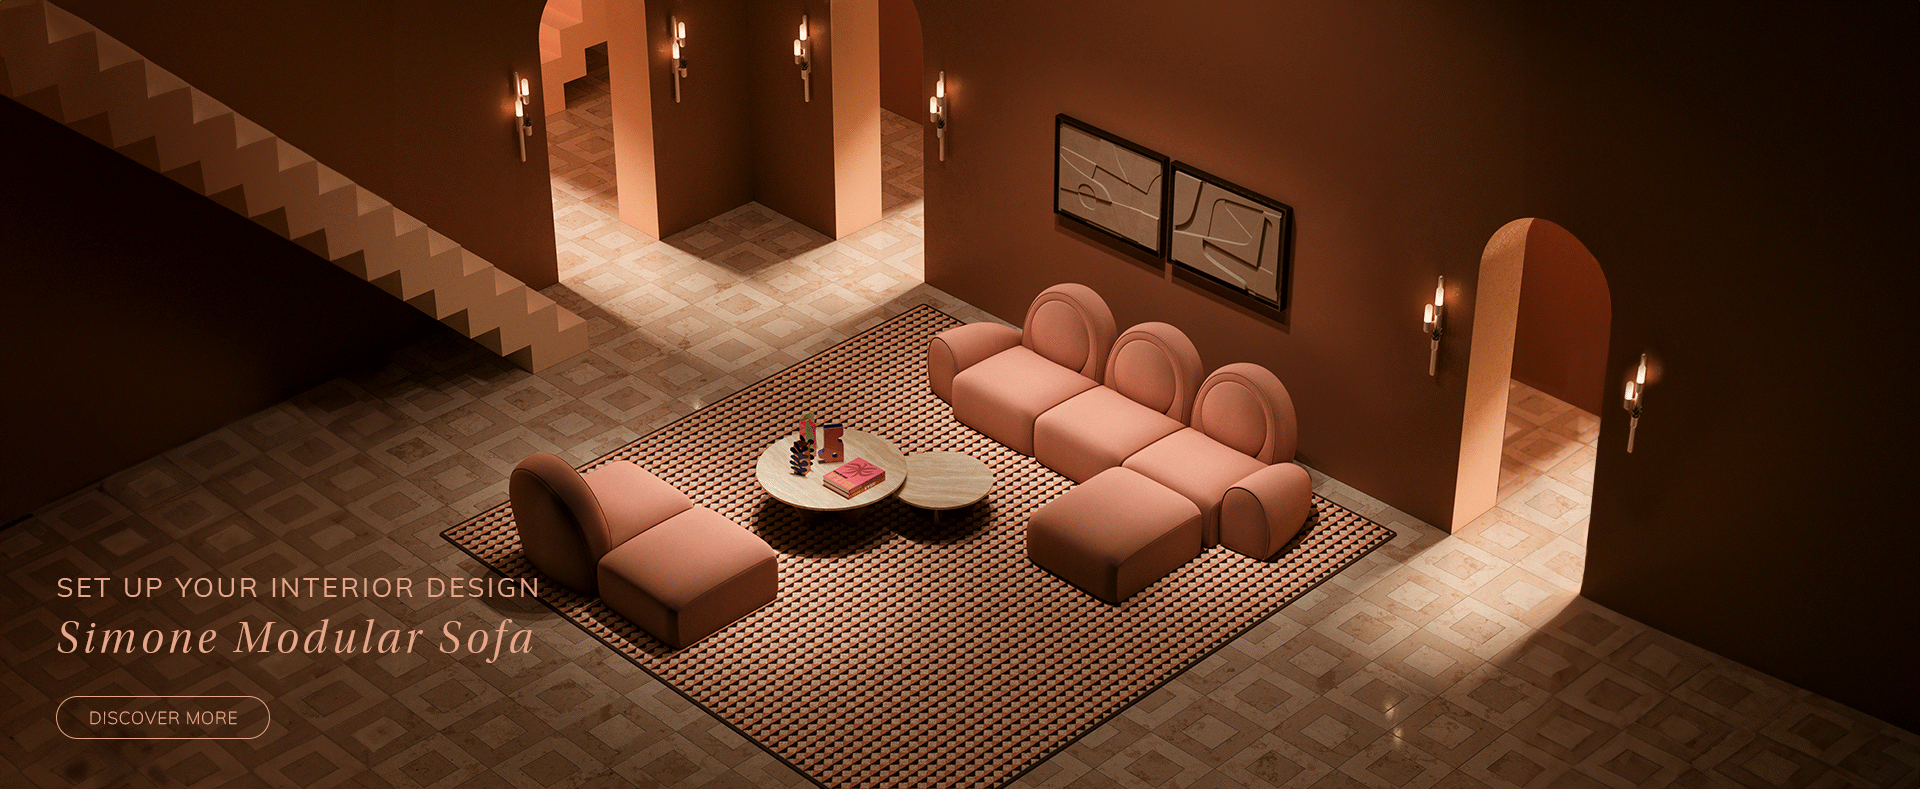 Simone Modular Sofa